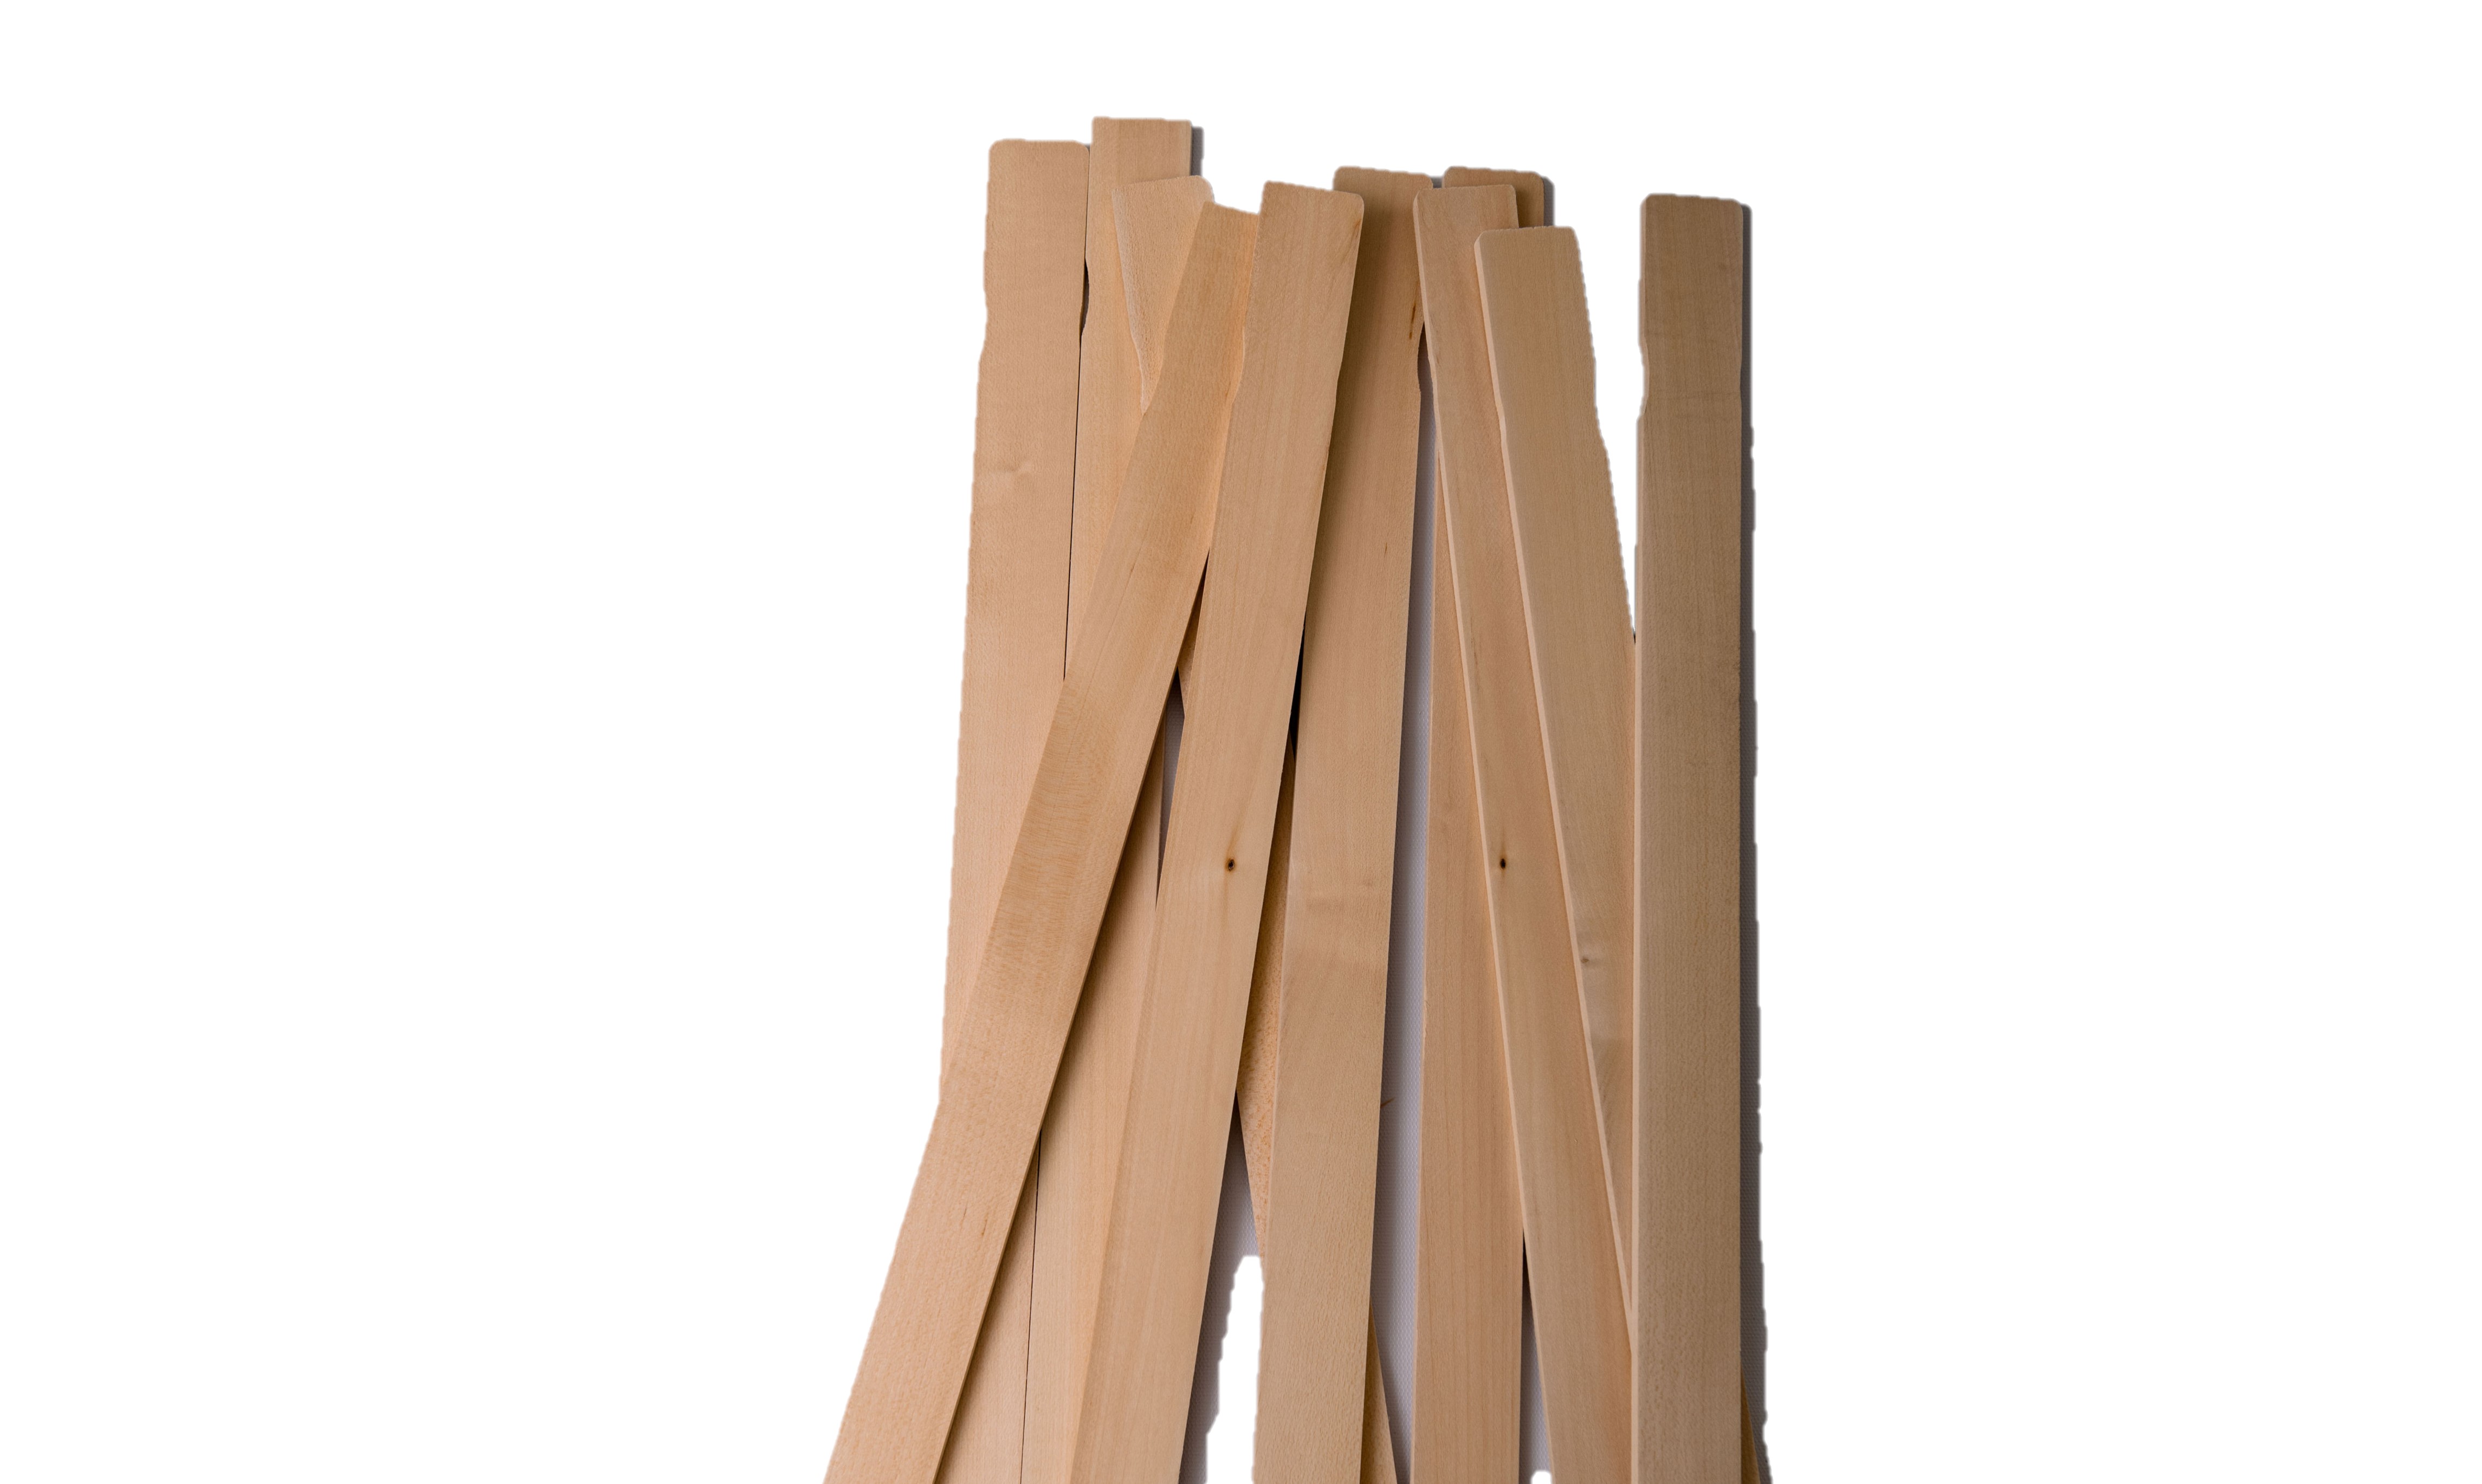 5 gal Paint Stir Sticks (250) 21 x 1-1/2 Thick USA Hardwood, Henry